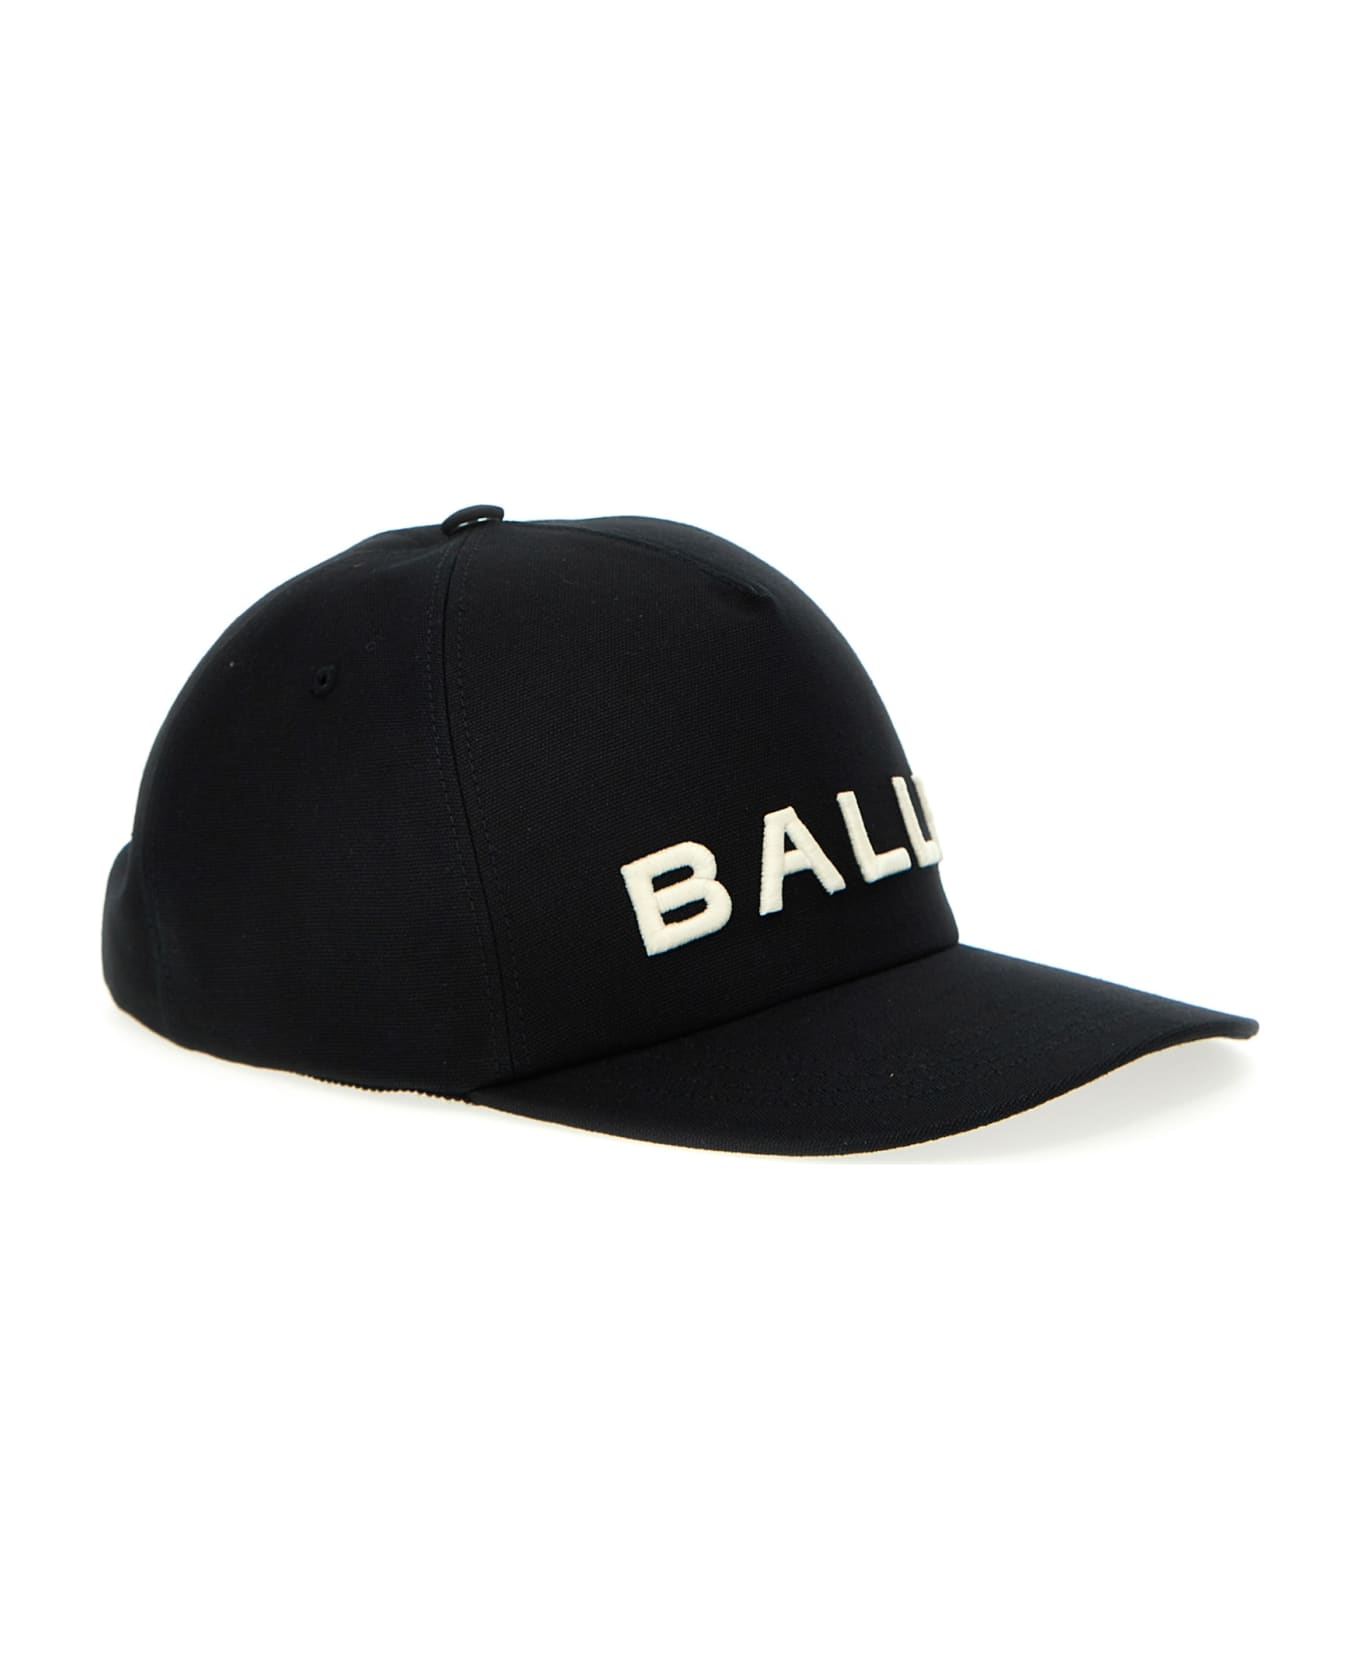 Bally Embroidered Logo Hat - Black 帽子